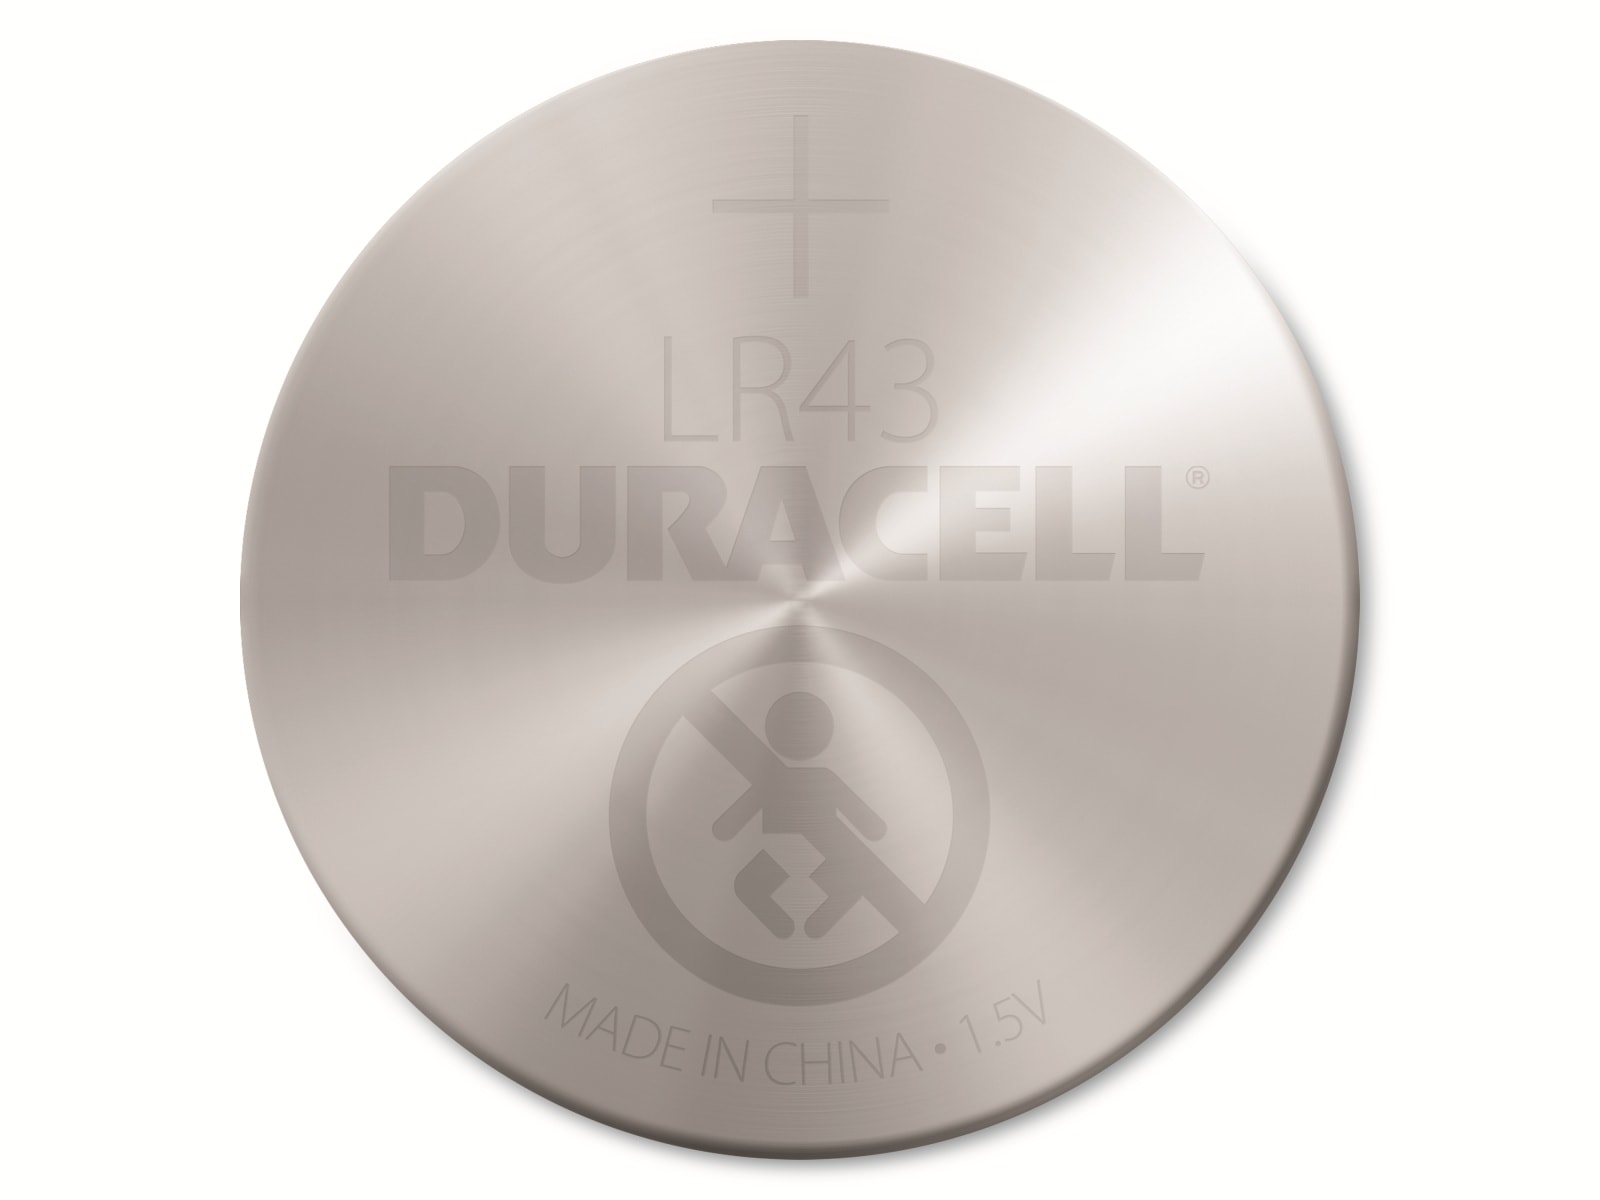 DURACELL Alkaline-Knopfzelle LR43, V12GA, 1.5V, Electronics, 2 Stück